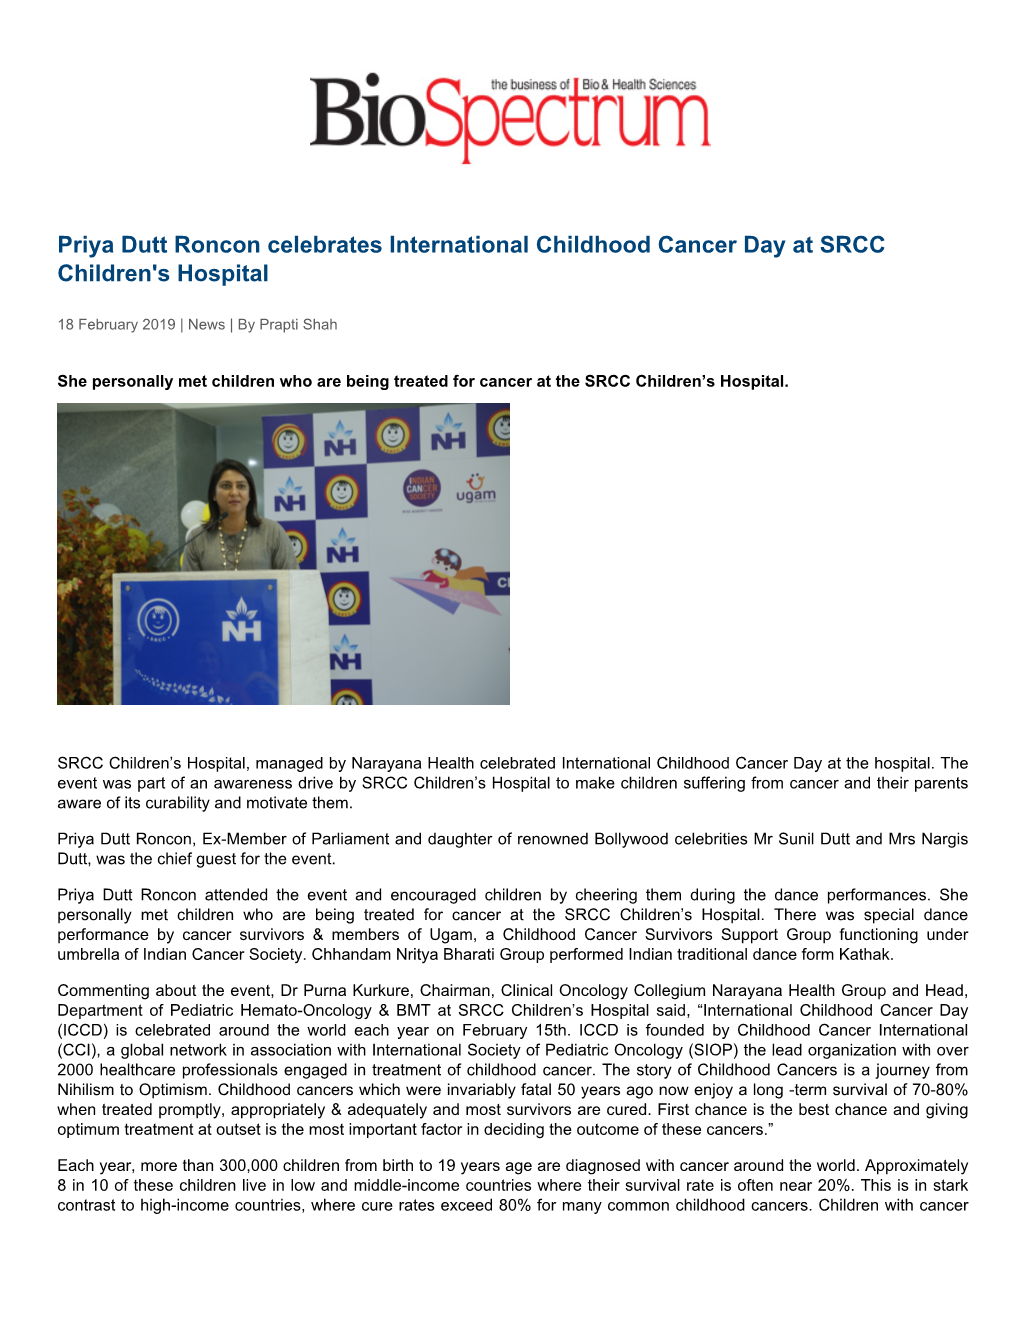 Priya Dutt Roncon Celebrates International Childhood Cancer Day at SRCC Children's Hospital